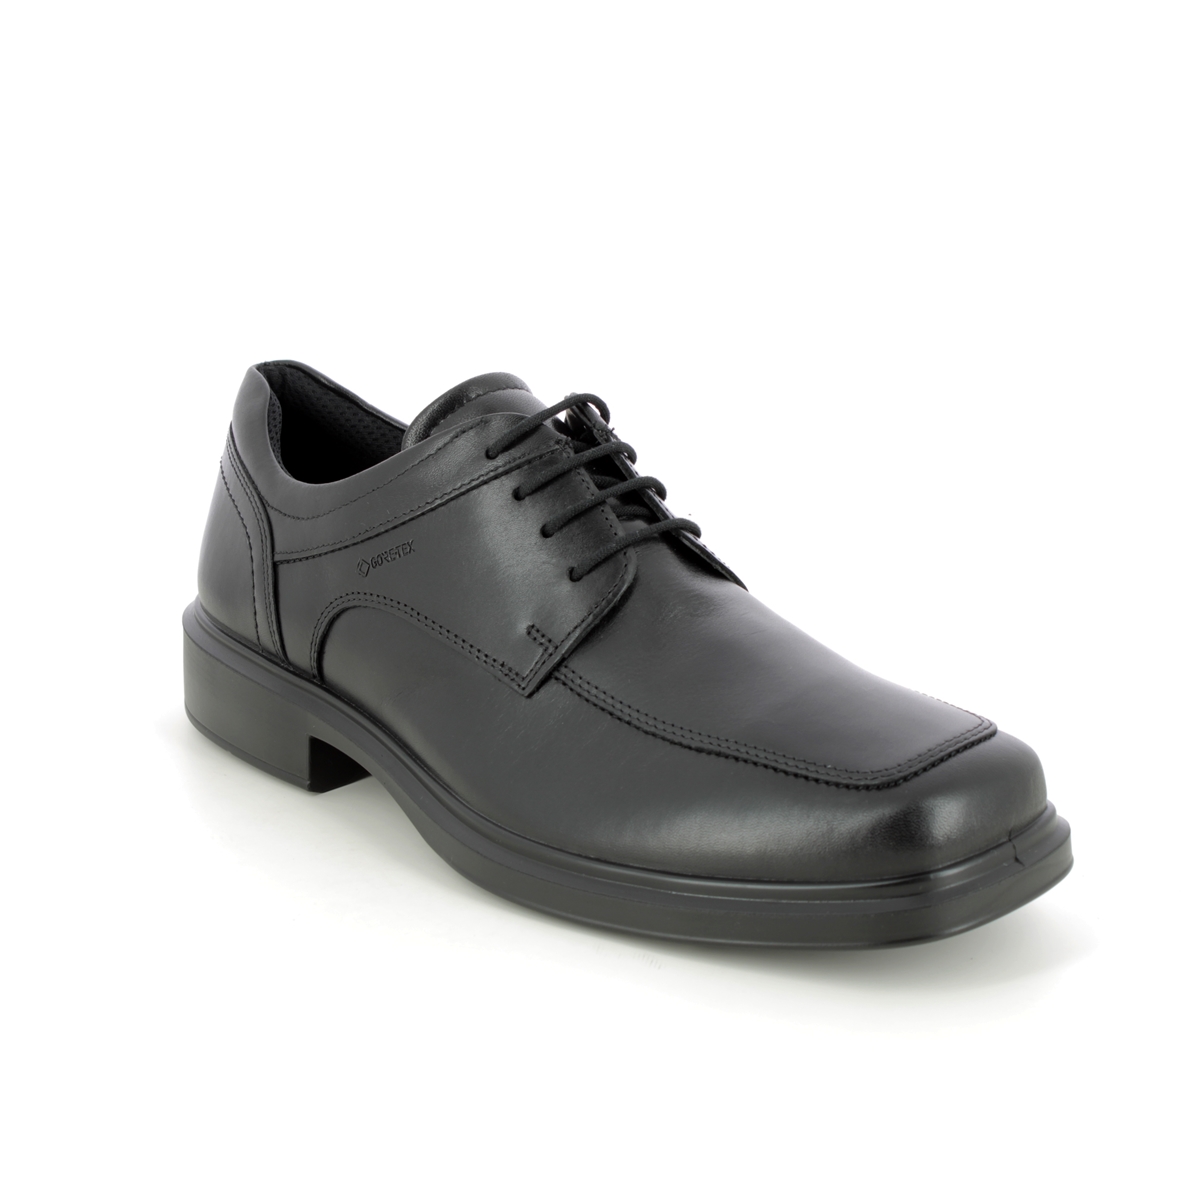 Ecco Helsinki 2 Gtx Black Leather Mens Formal Shoes 500204-01001 In Size 44 In Plain Black Leather